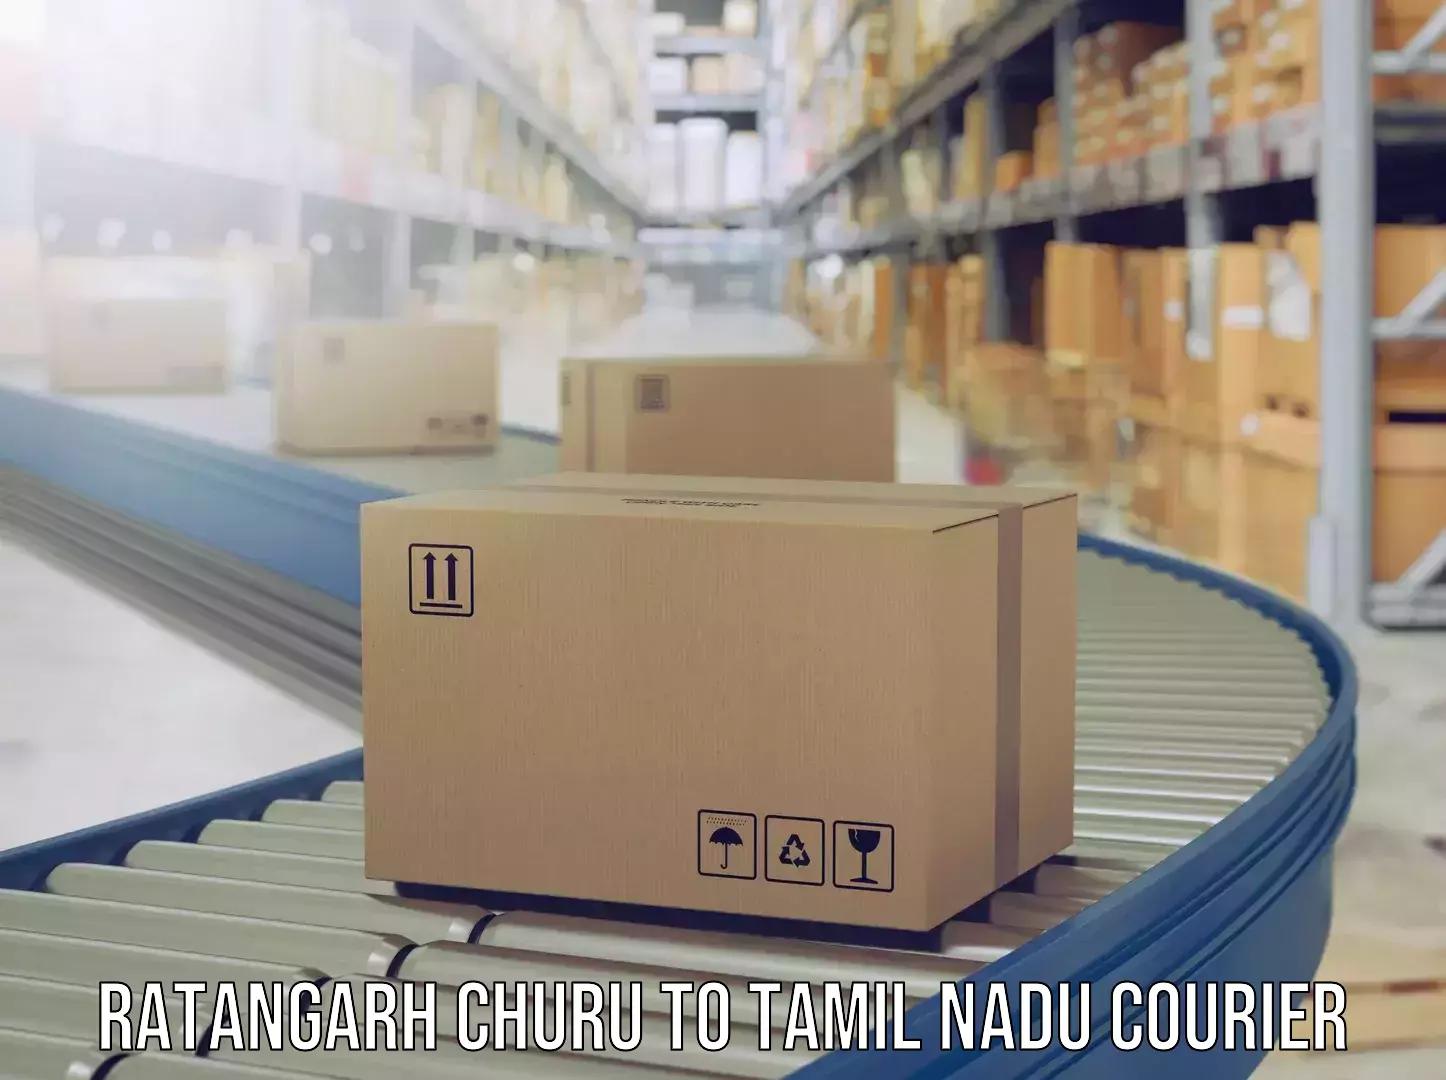 Luggage shipment specialists Ratangarh Churu to Narikkudi